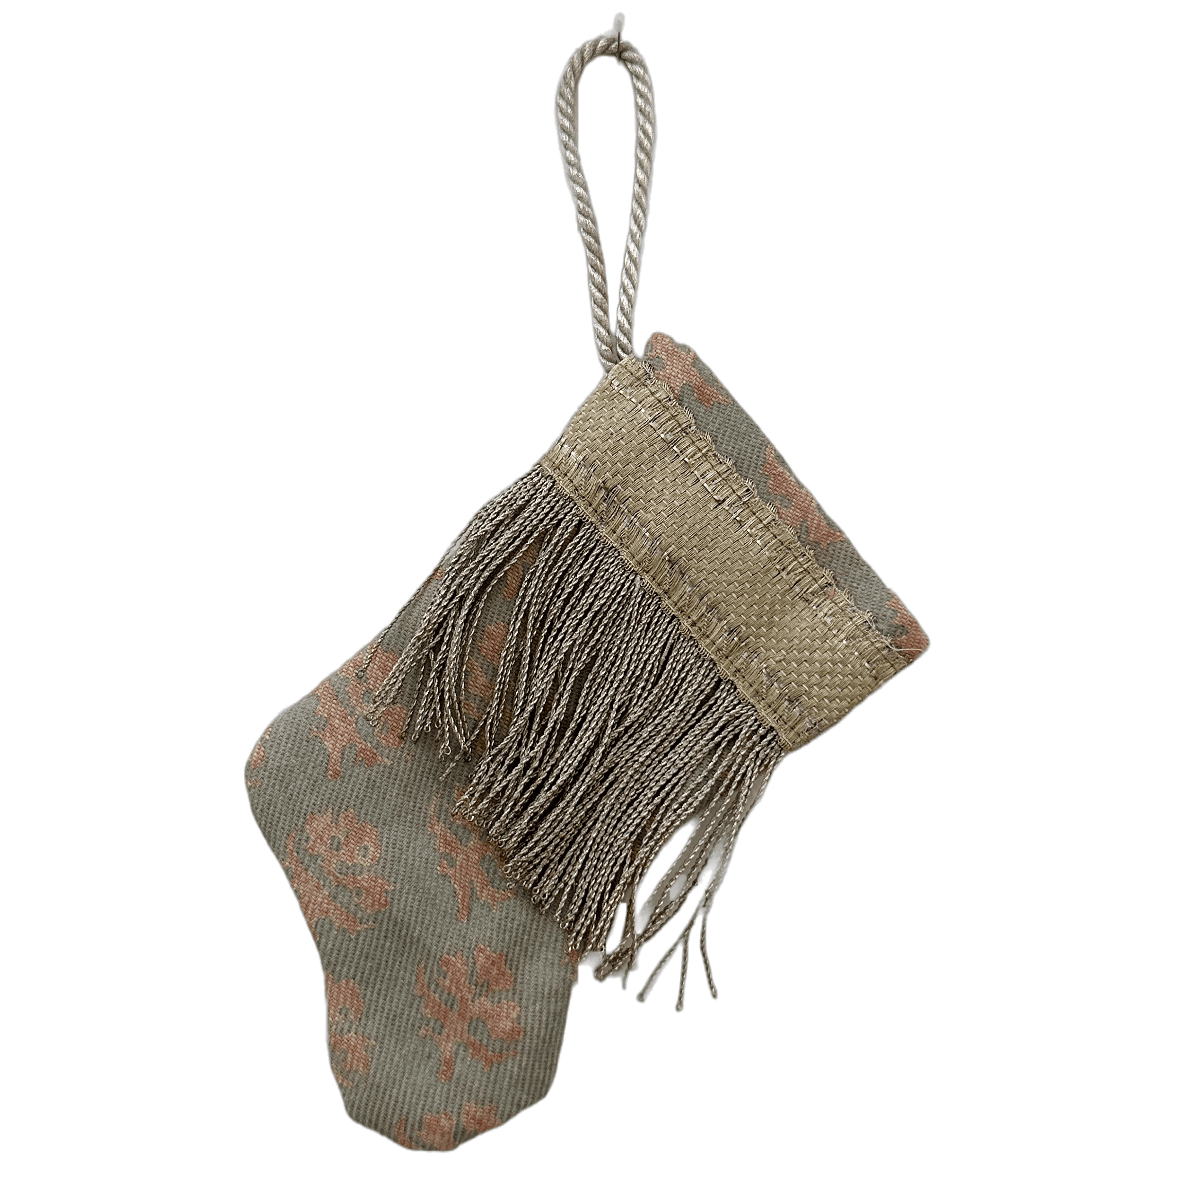 Handmade Mini Stocking Ornament from Antique & Vintage Textiles, Trims | Mint Fortuny Ornament B. Viz Design D 